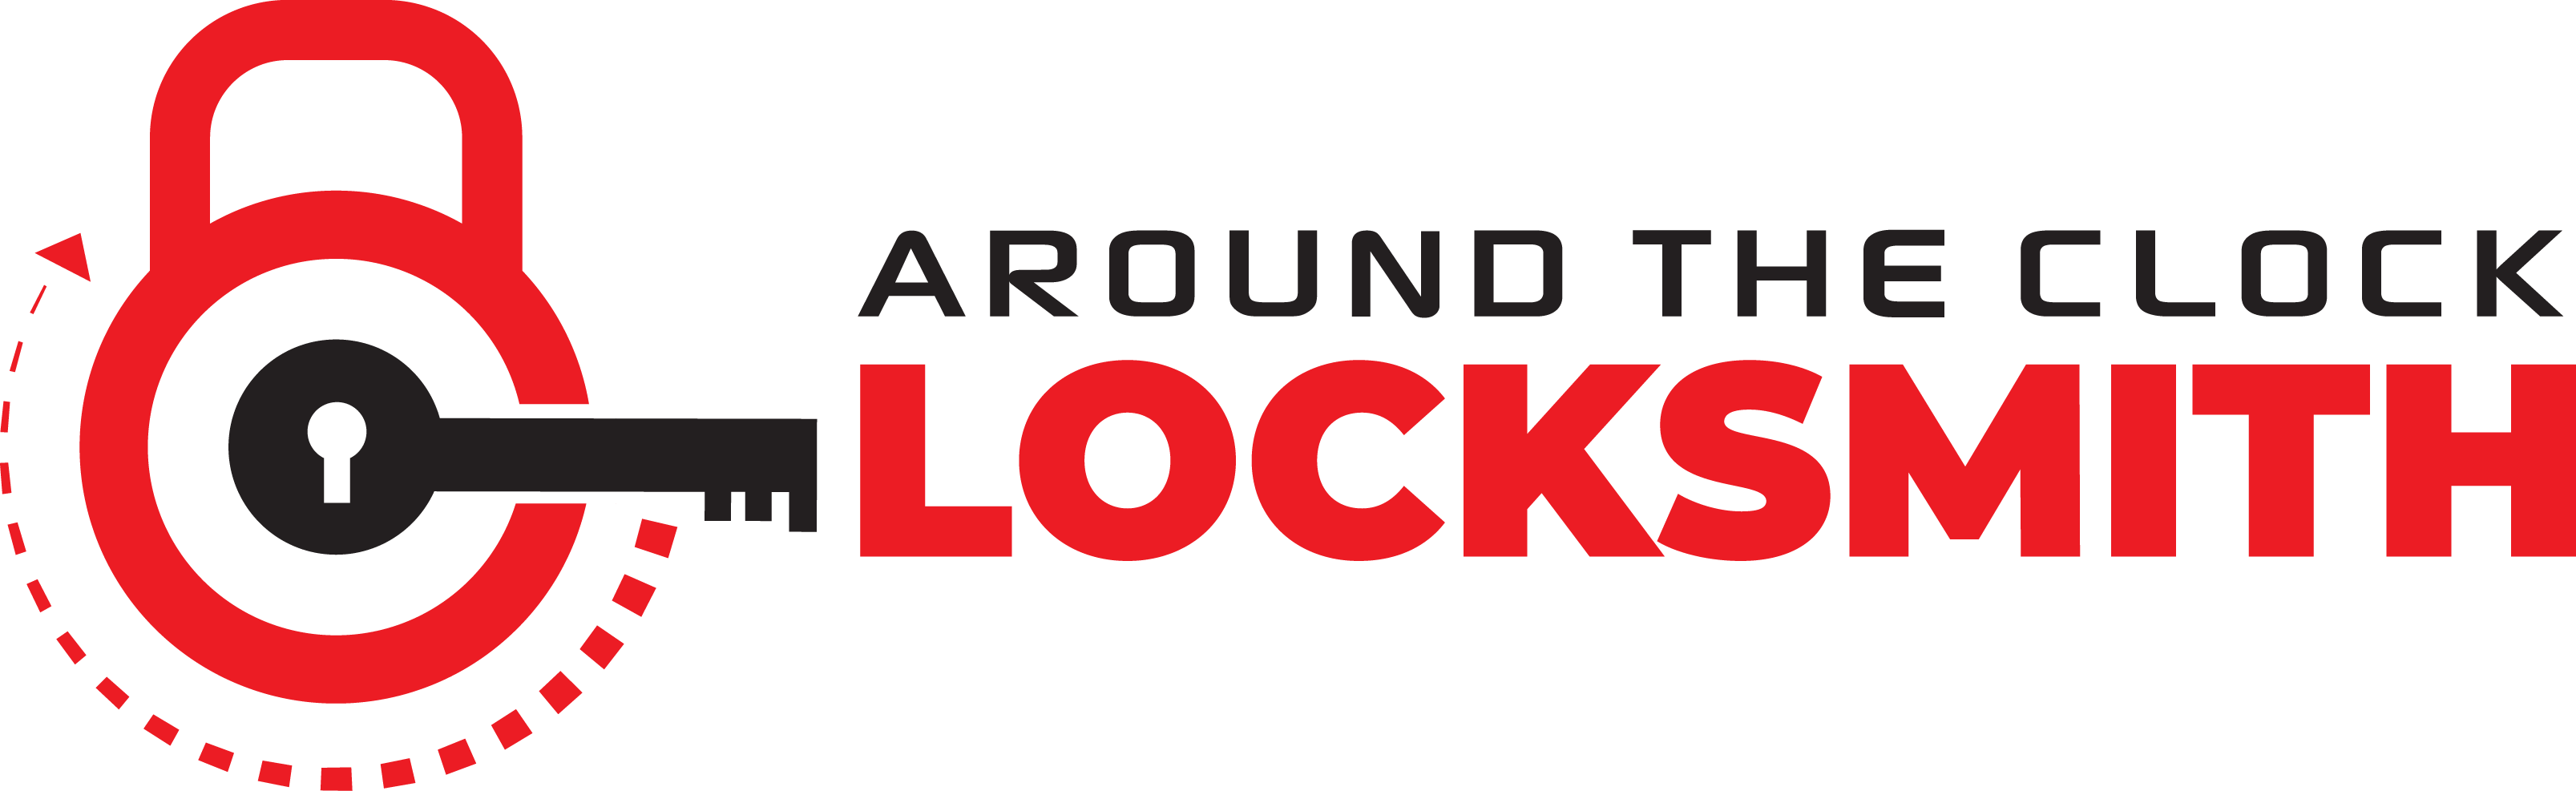 Around-the-clock-locksmith final.png